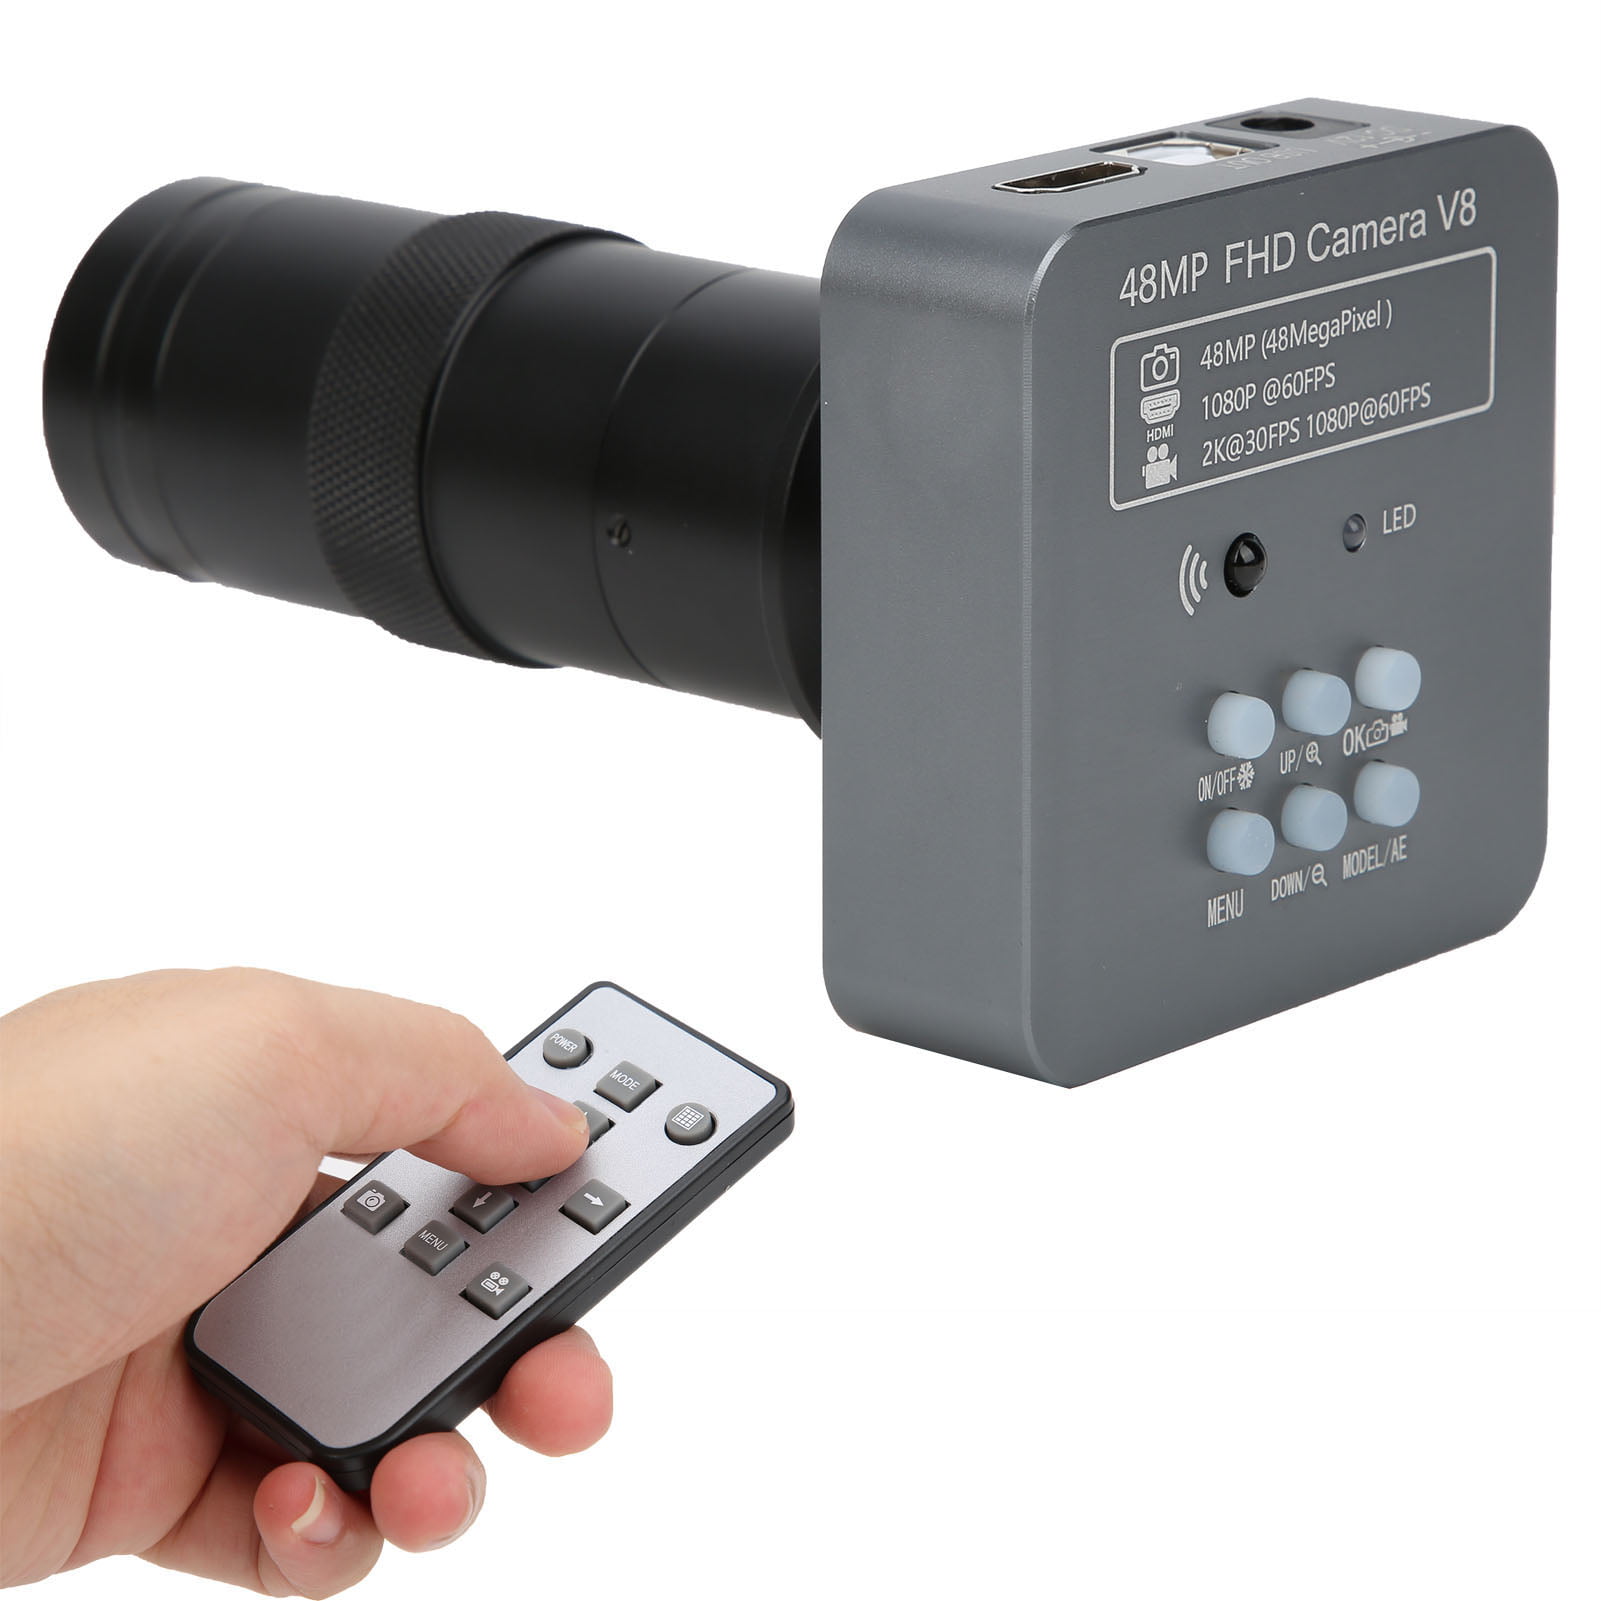 Printing Industrial Camera Lens Ticket Identification Mobile Phone Repair U.S. regulations Microscope Industrial Camera High-Definition for Fingerprint Identification 